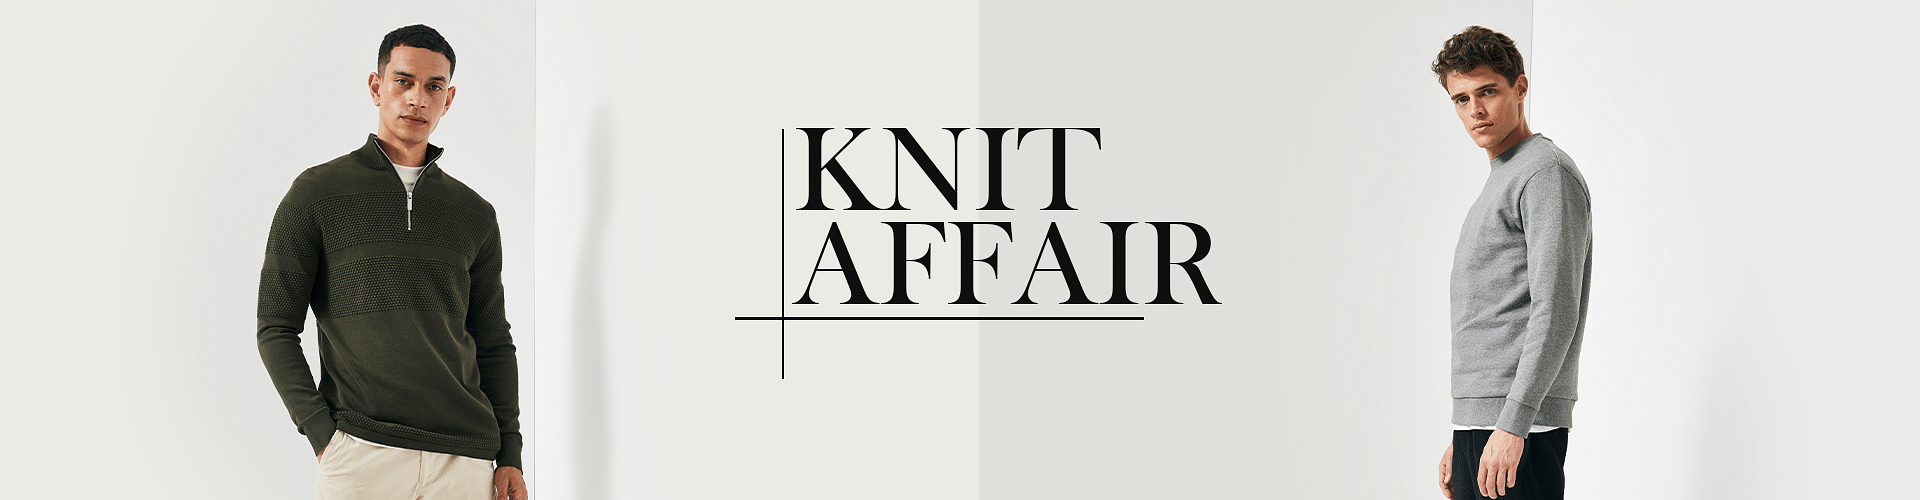 knit affair